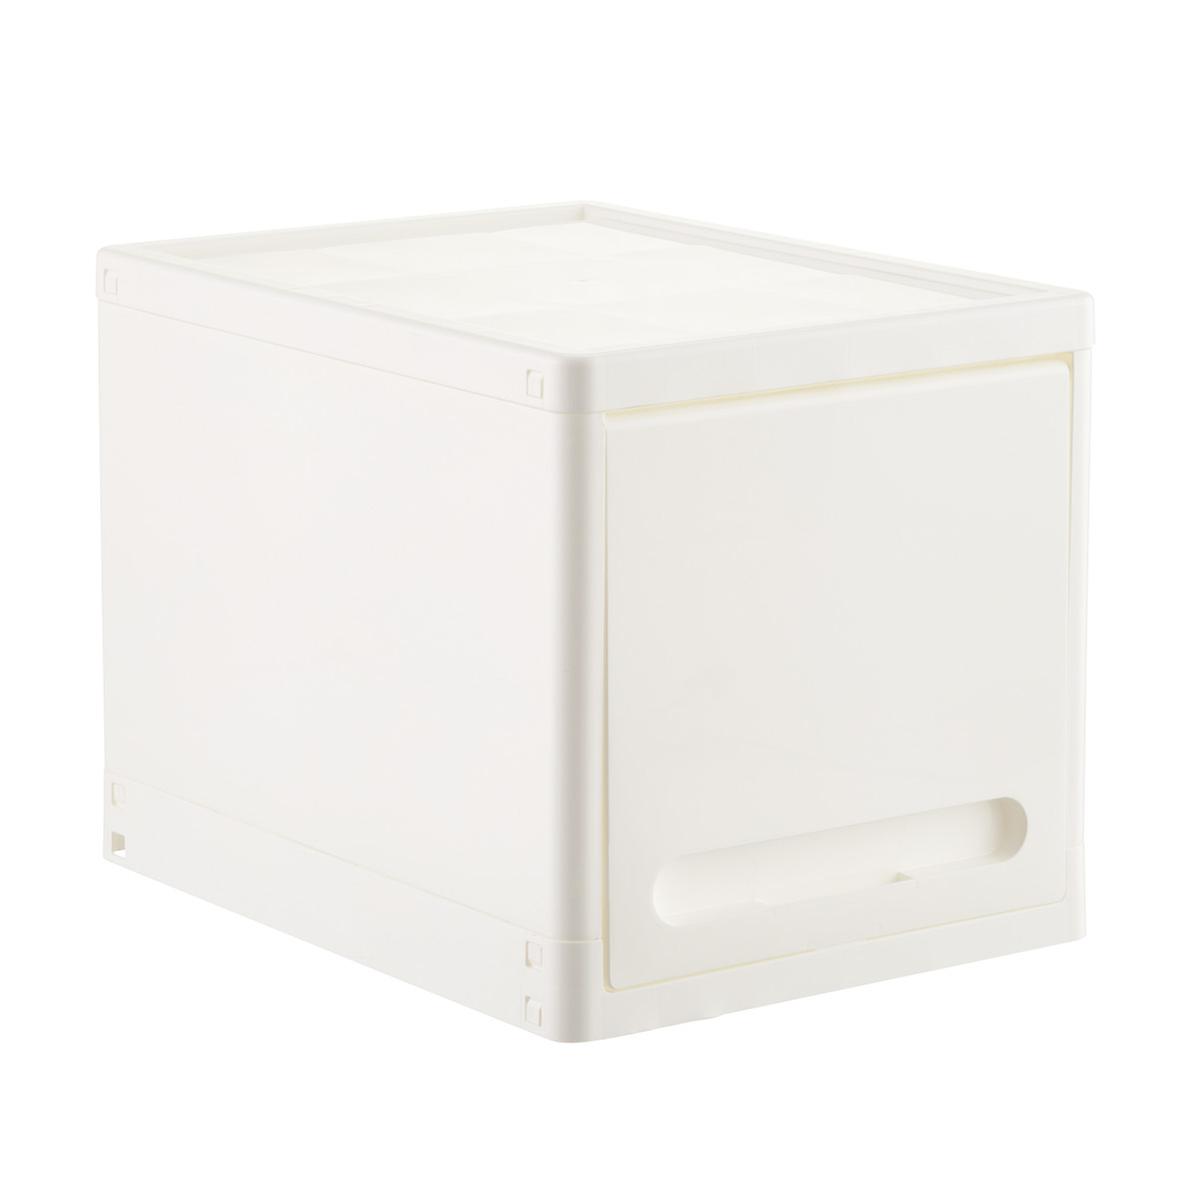 White Plastic Storage Cube with Retractable Door The